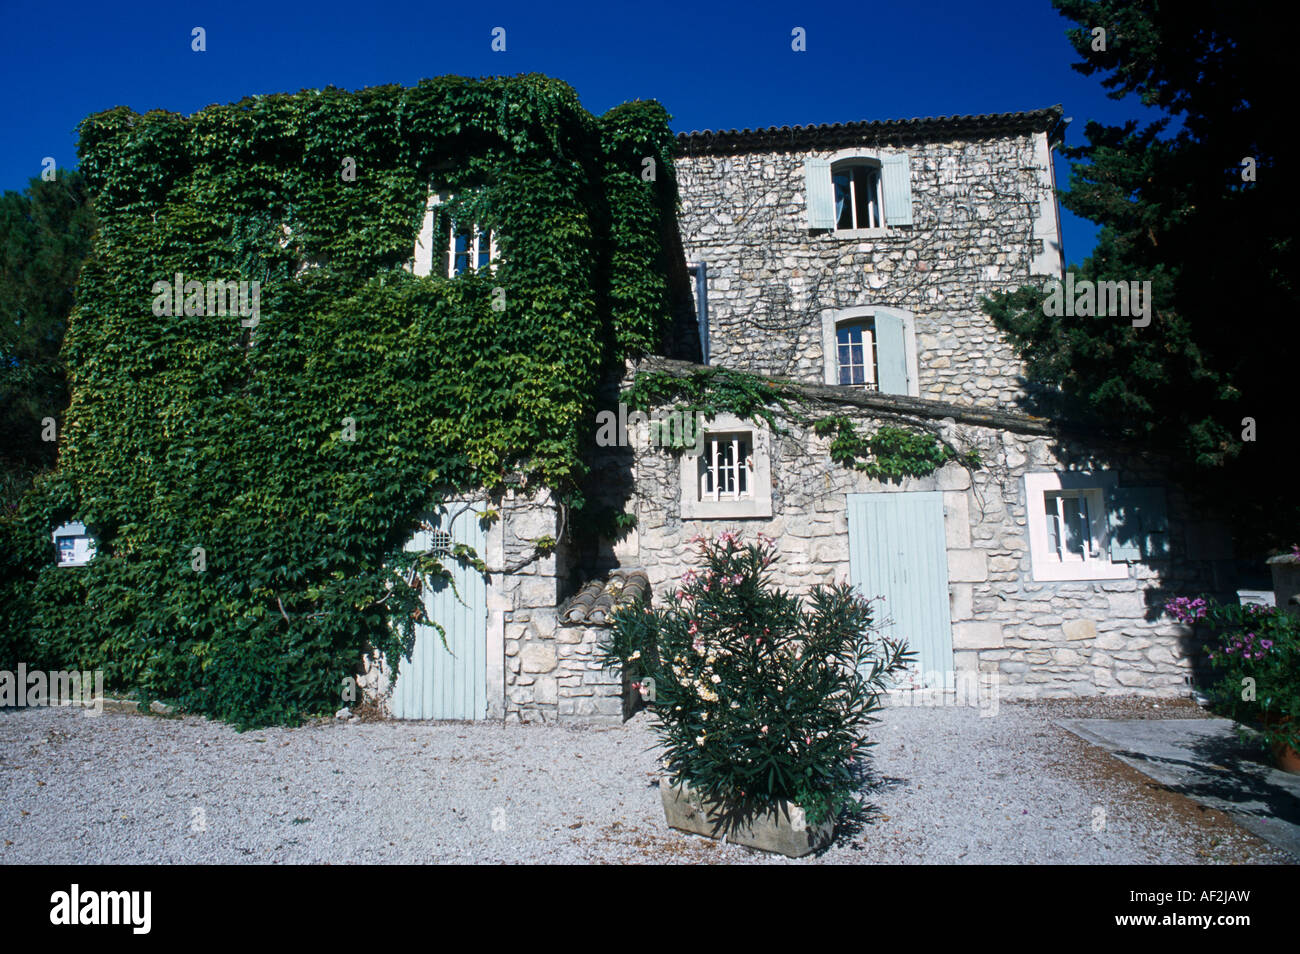 Near St Remy Provence France Doamine de Valmouriane Country Hotel Stock Photo